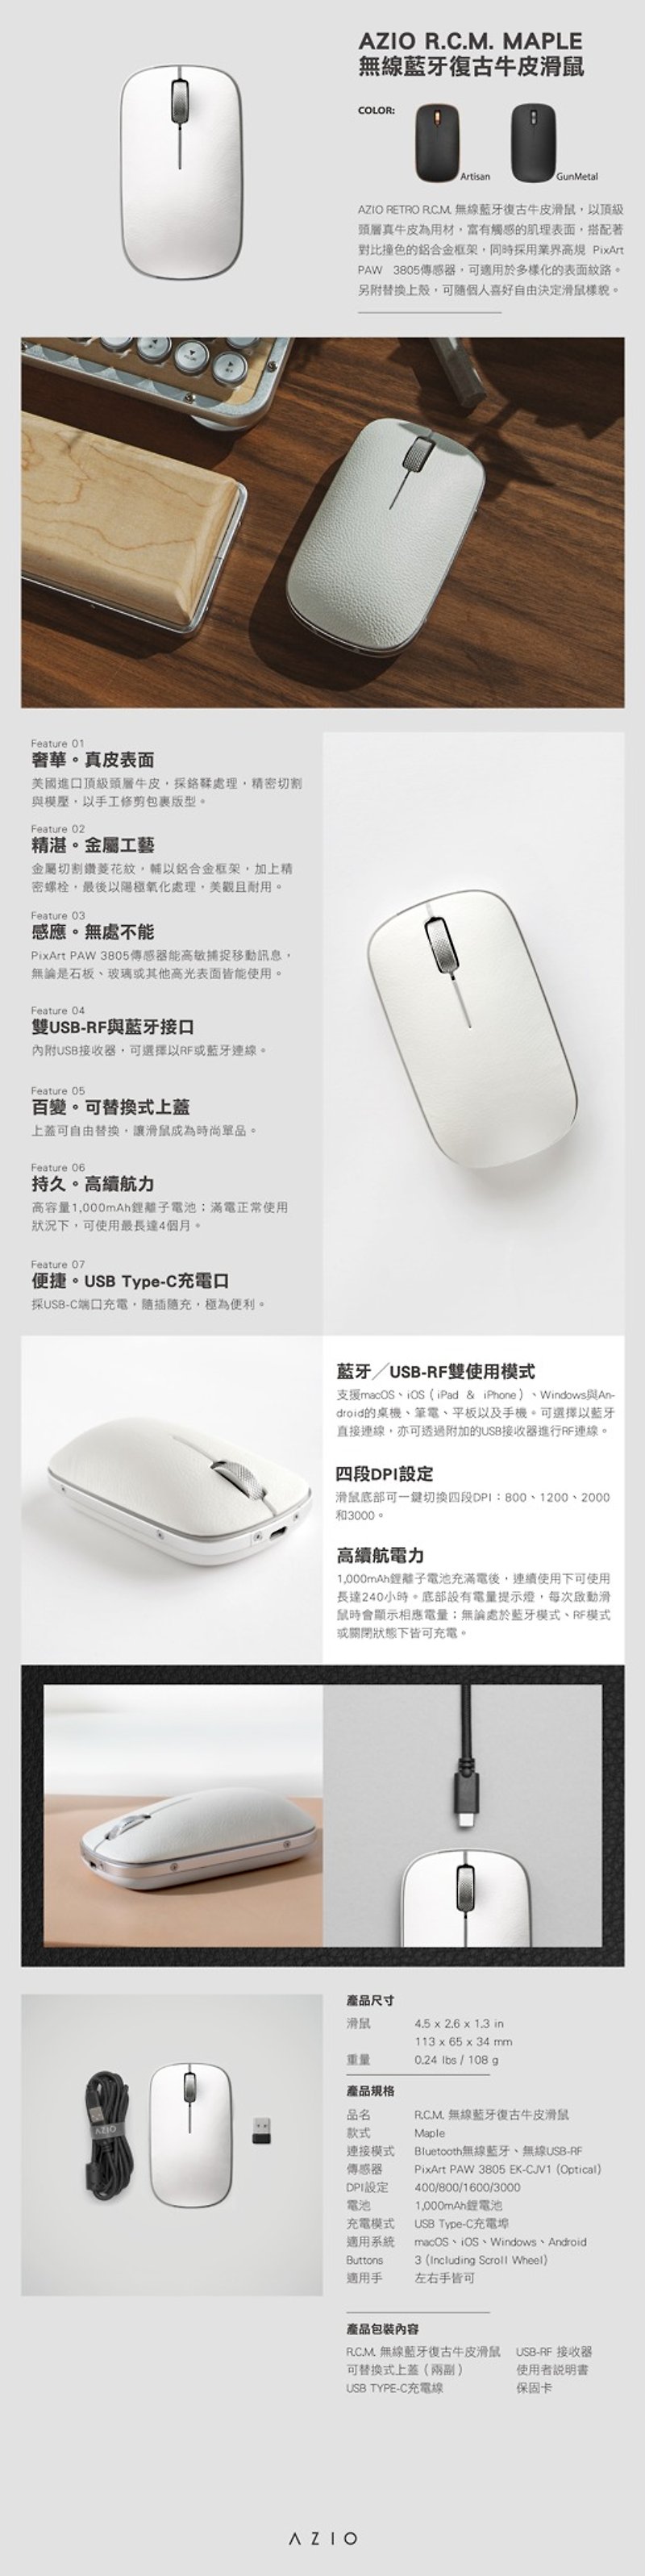 AZIO RCM MAPLE Wireless Bluetooth Retro Cowhide Mouse - อุปกรณ์เสริมคอมพิวเตอร์ - โลหะ ขาว